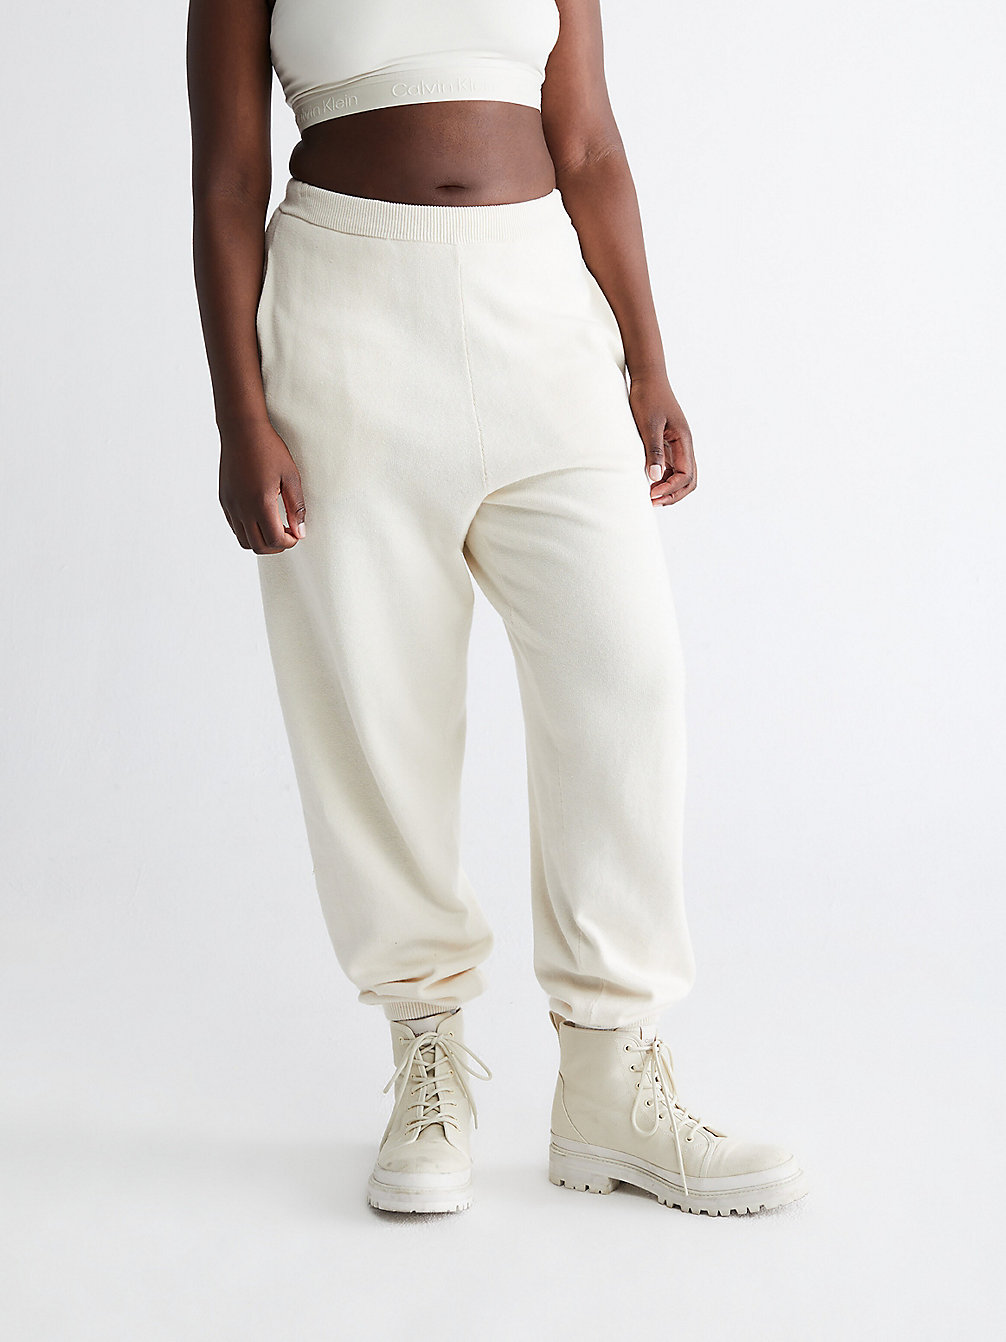 BONE WHITE Unisex Cotton Wool Knit Joggers undefined unisex Calvin Klein